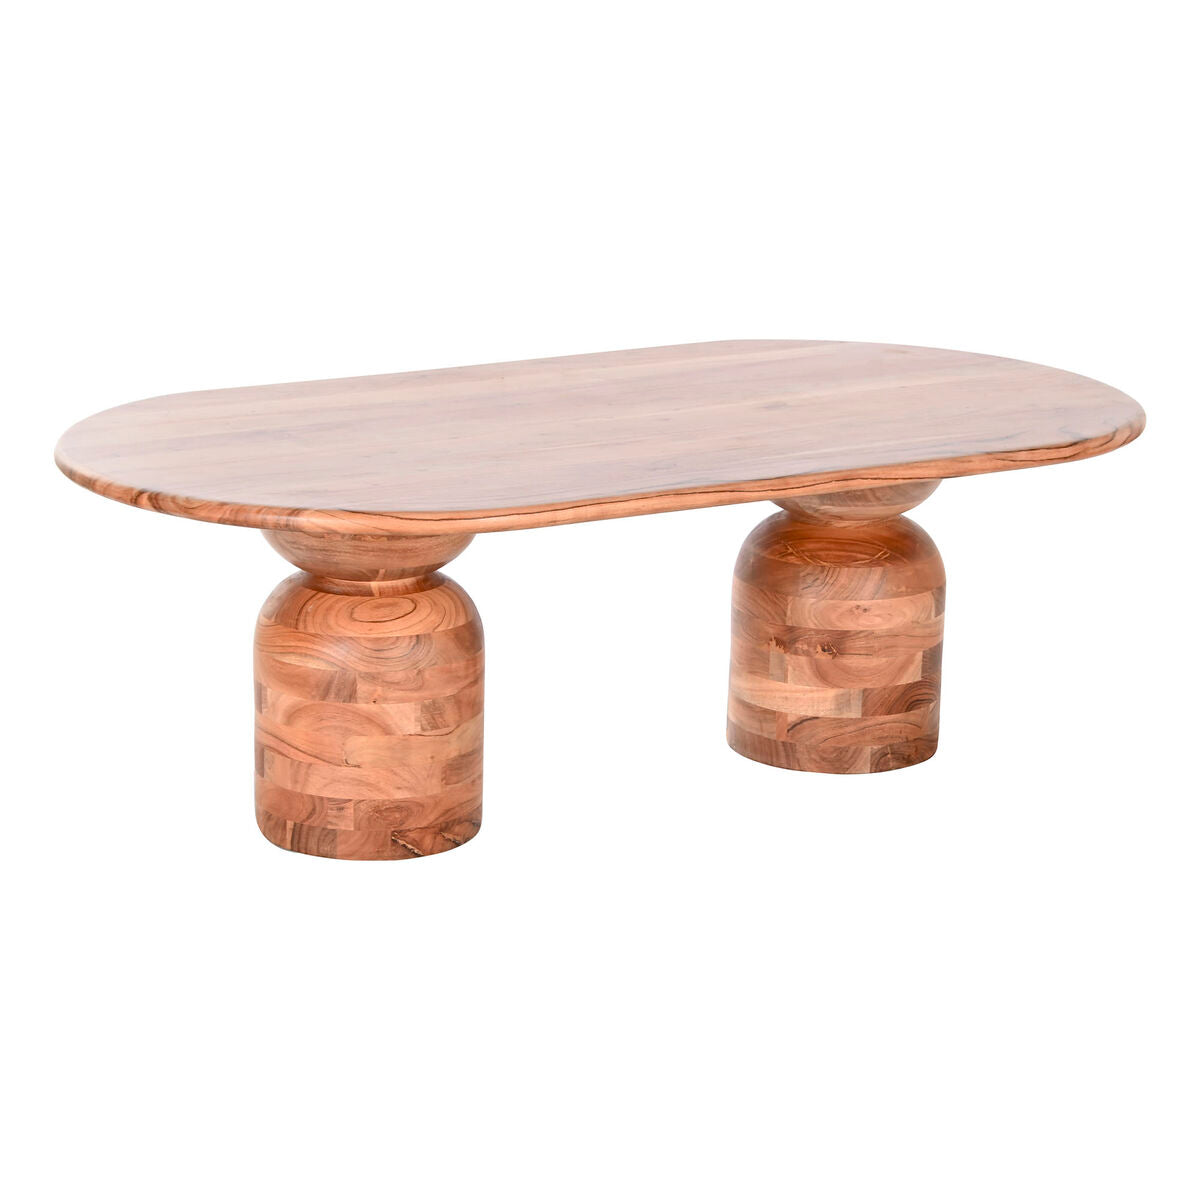 Oval Centre Table in Acacia (135 x 75 x 45 cm)